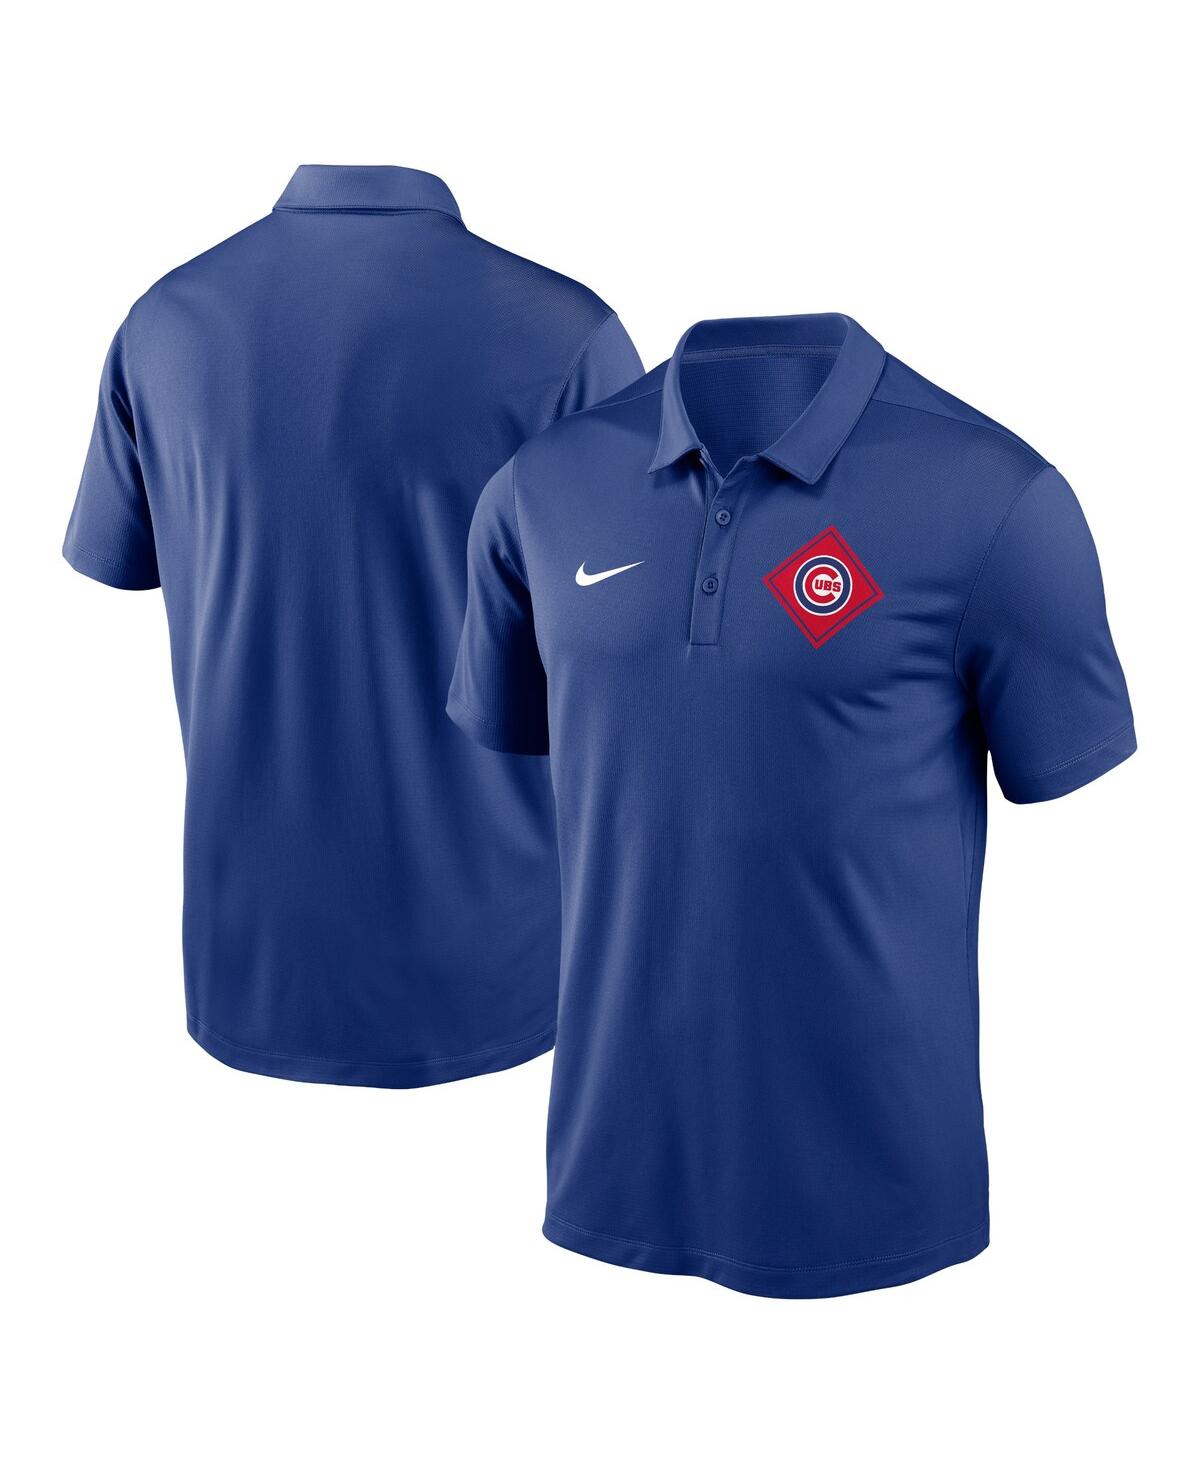 Men's Nike Royal Chicago Cubs Diamond Icon Franchise Performance Polo Shirt - Royal